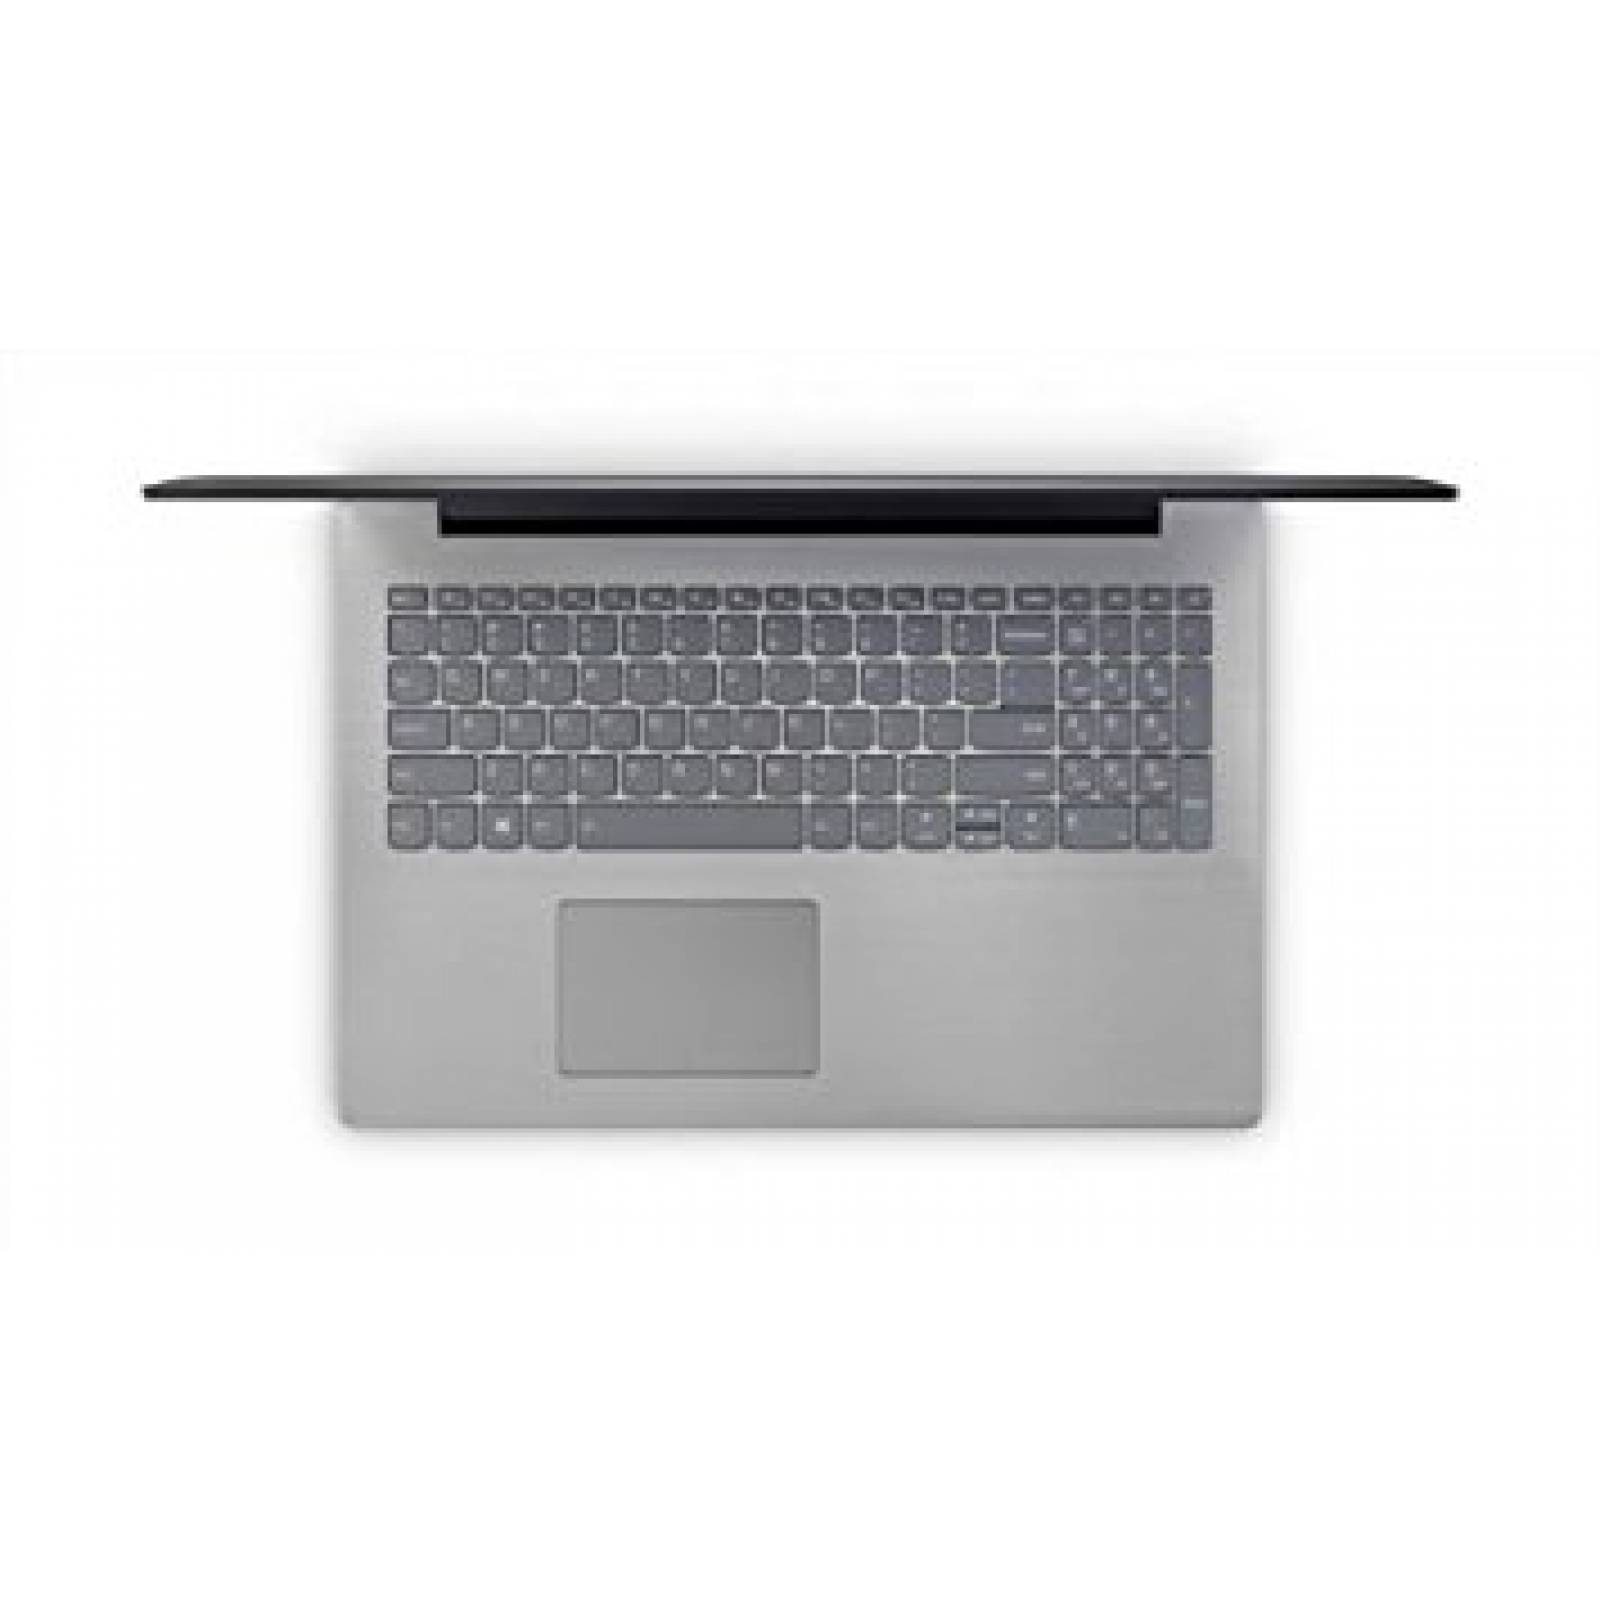 Laptop Lenovo Ideapad 320 2018 15.6 Celeron 4gb 1tb Dvd -neg